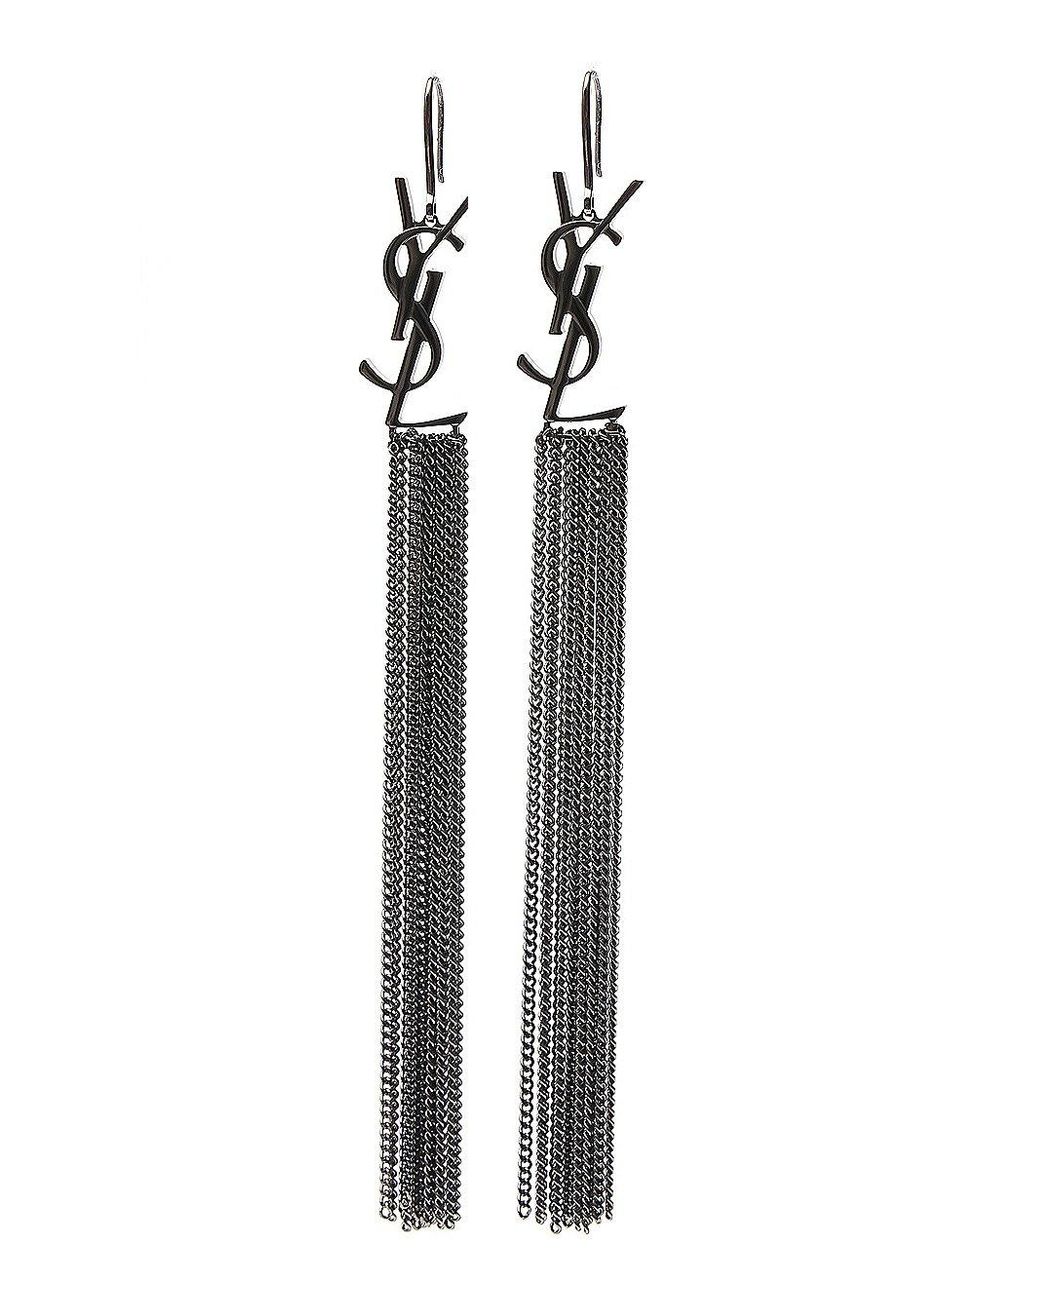 Saint Laurent Monogram Tassel Earrings in Silver (Metallic) - Lyst